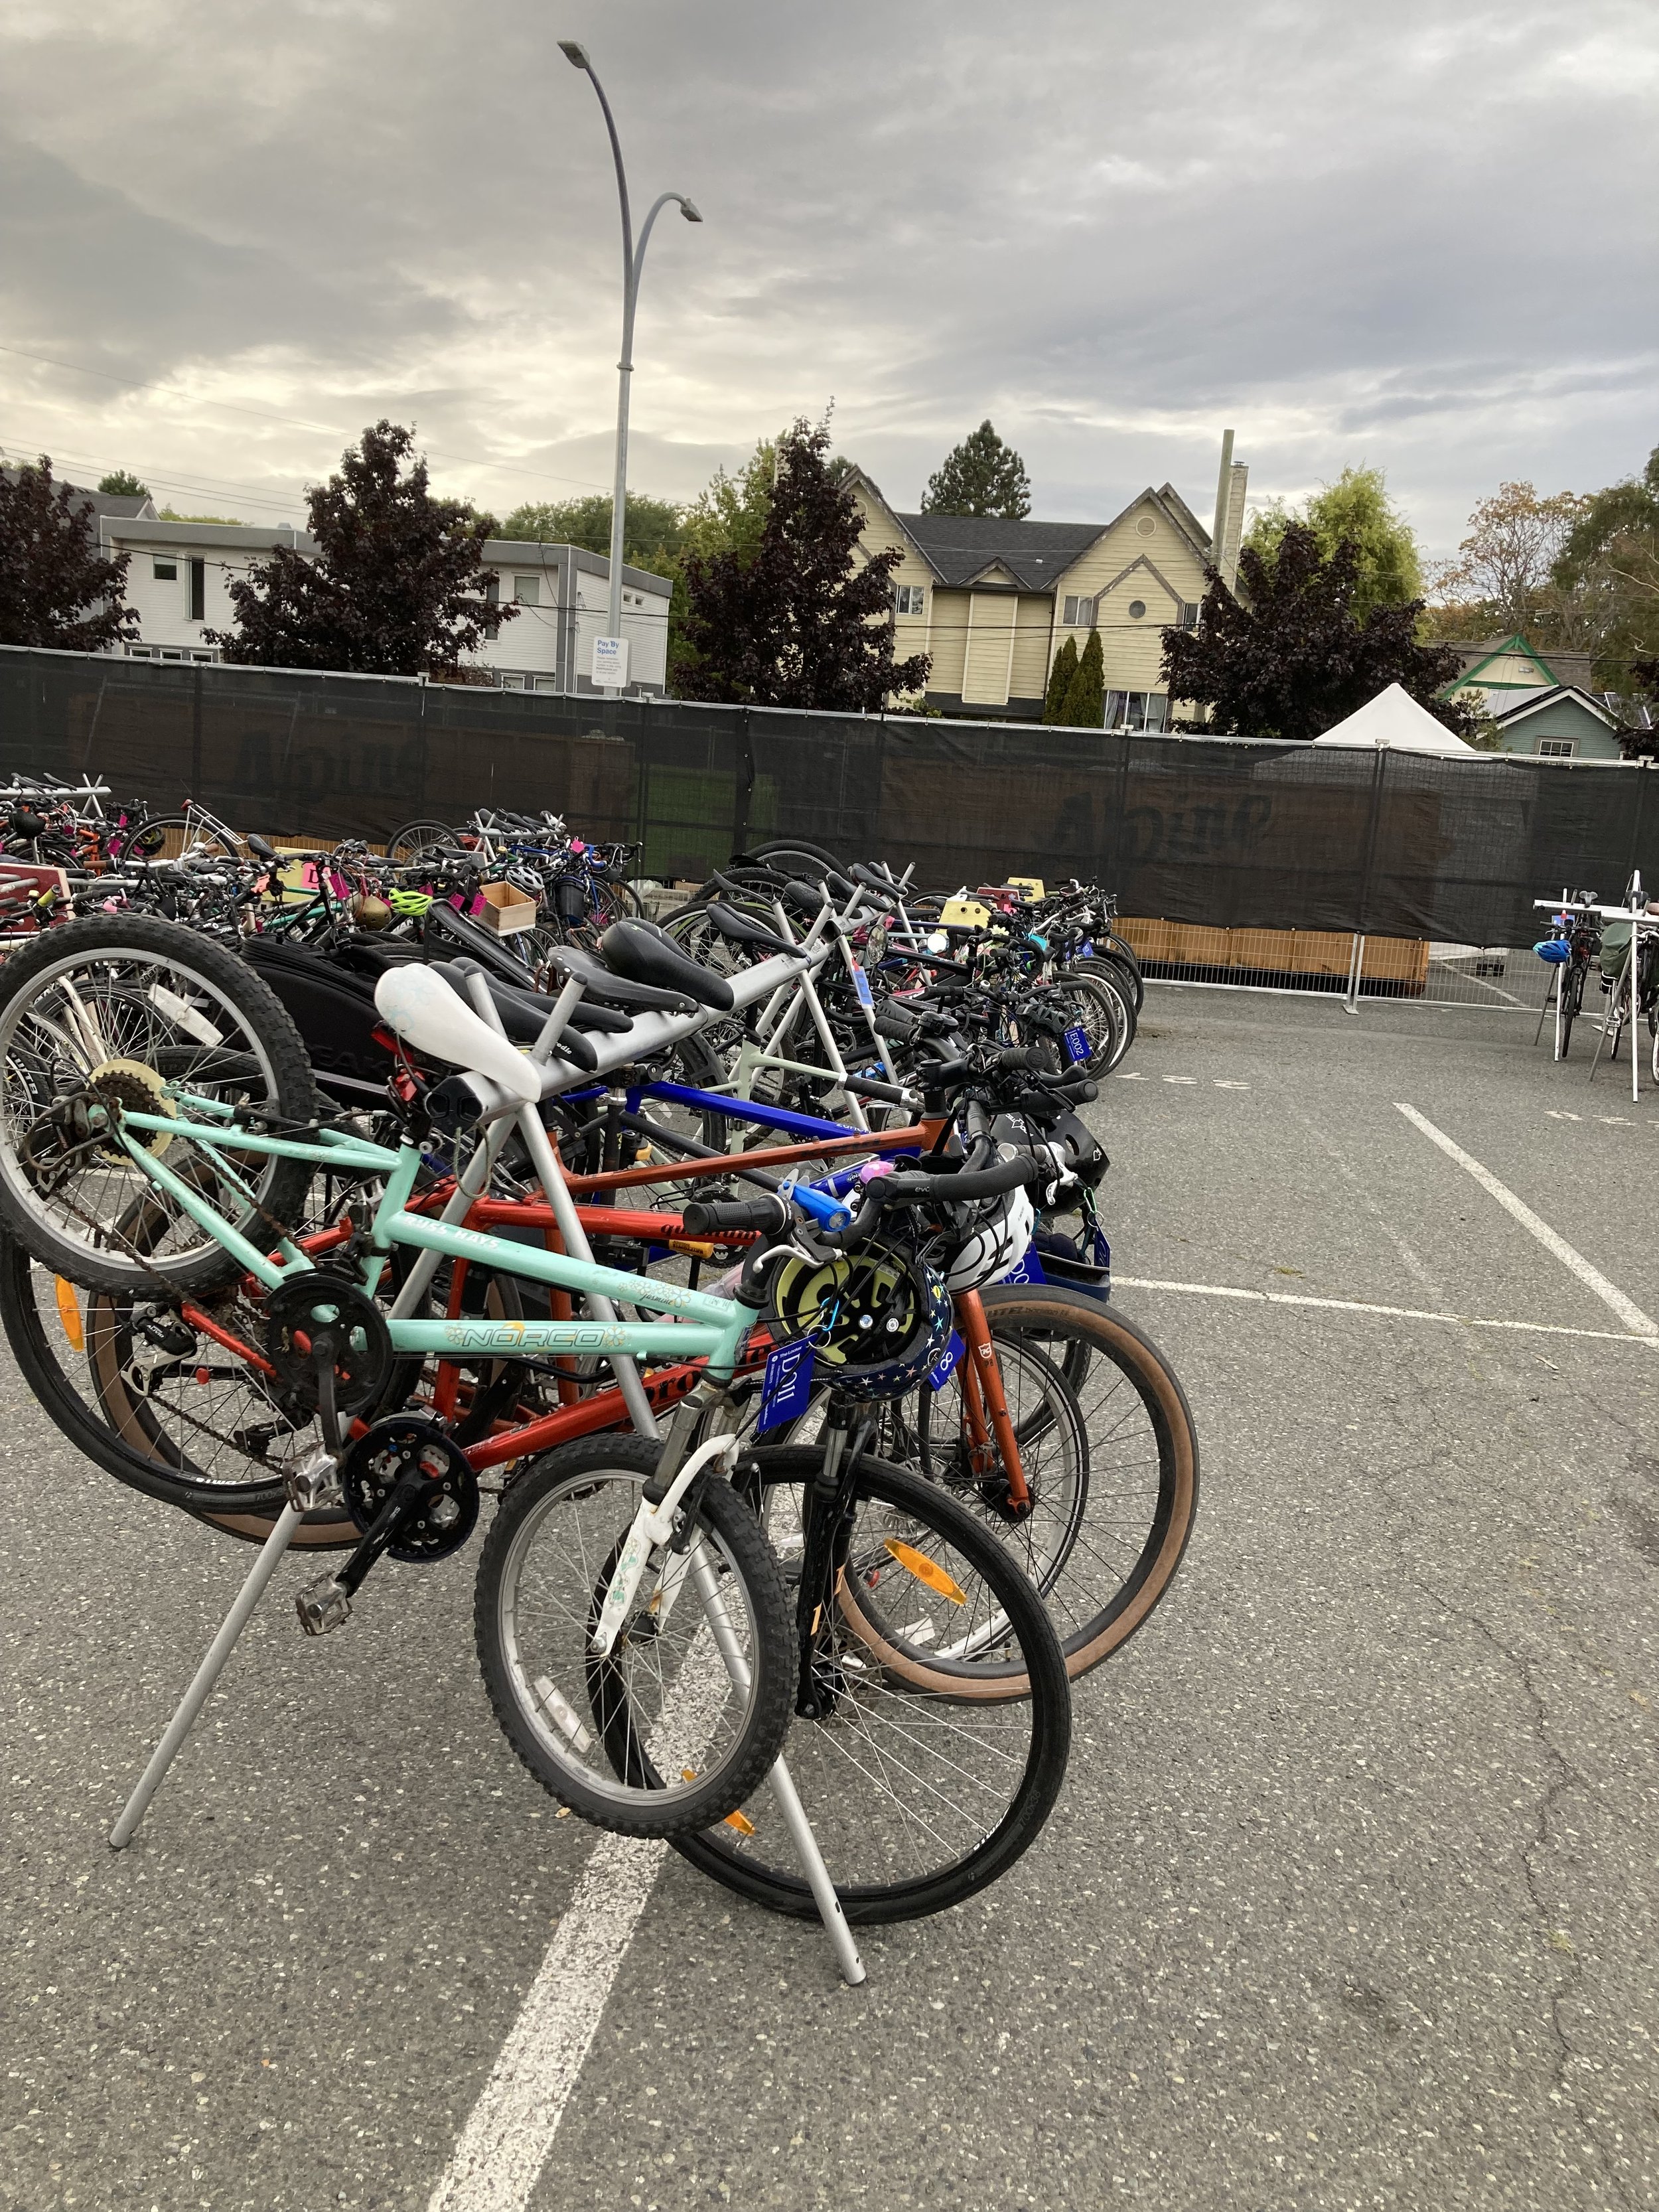 Valeted bikes on a triathlon-type rack